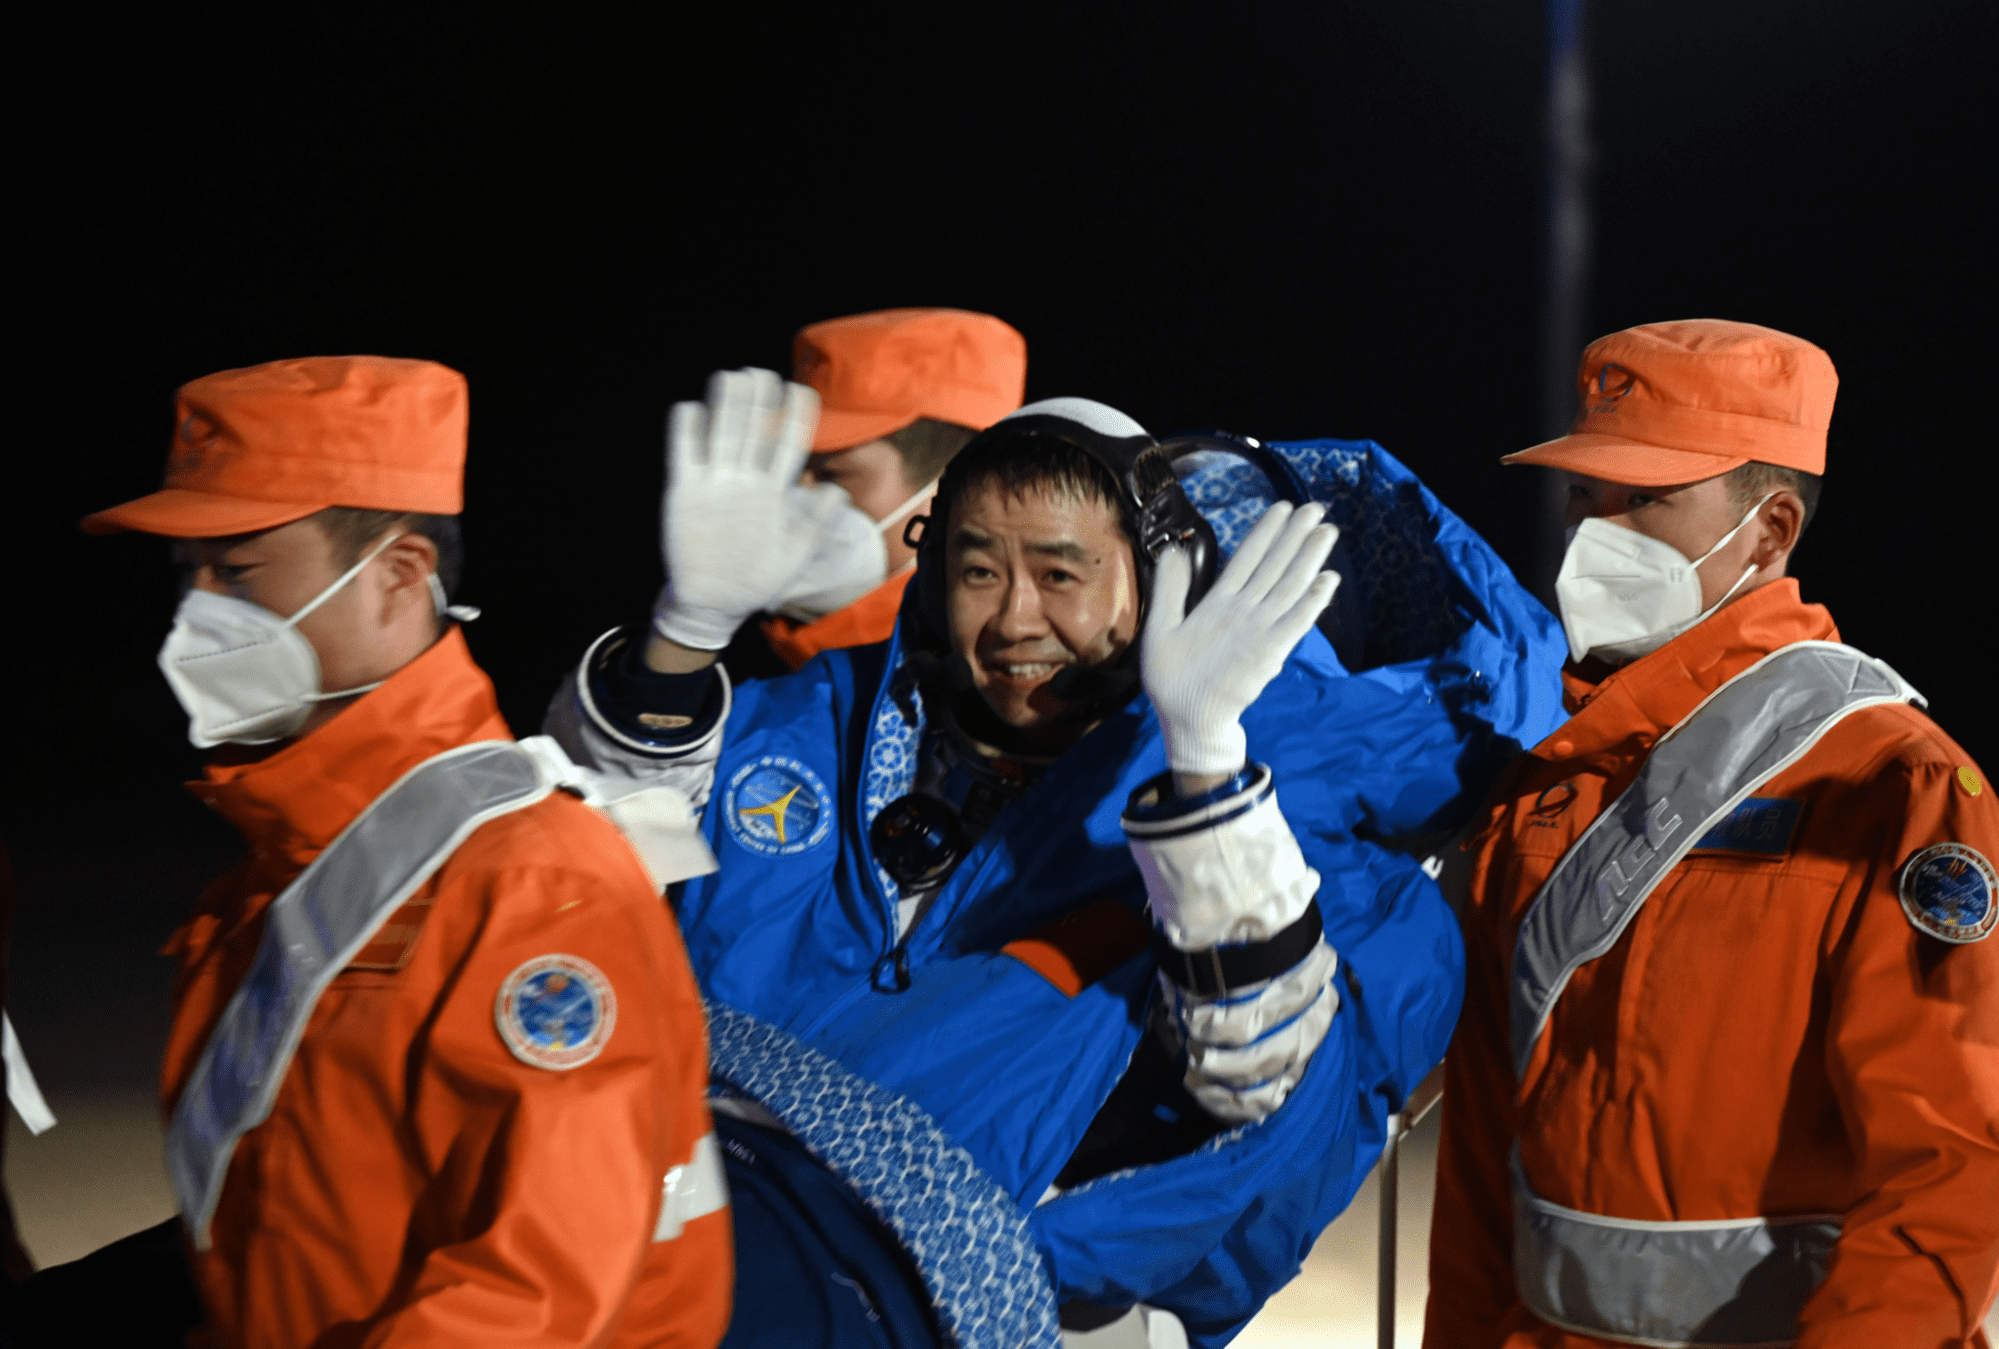 Astronautas chineses